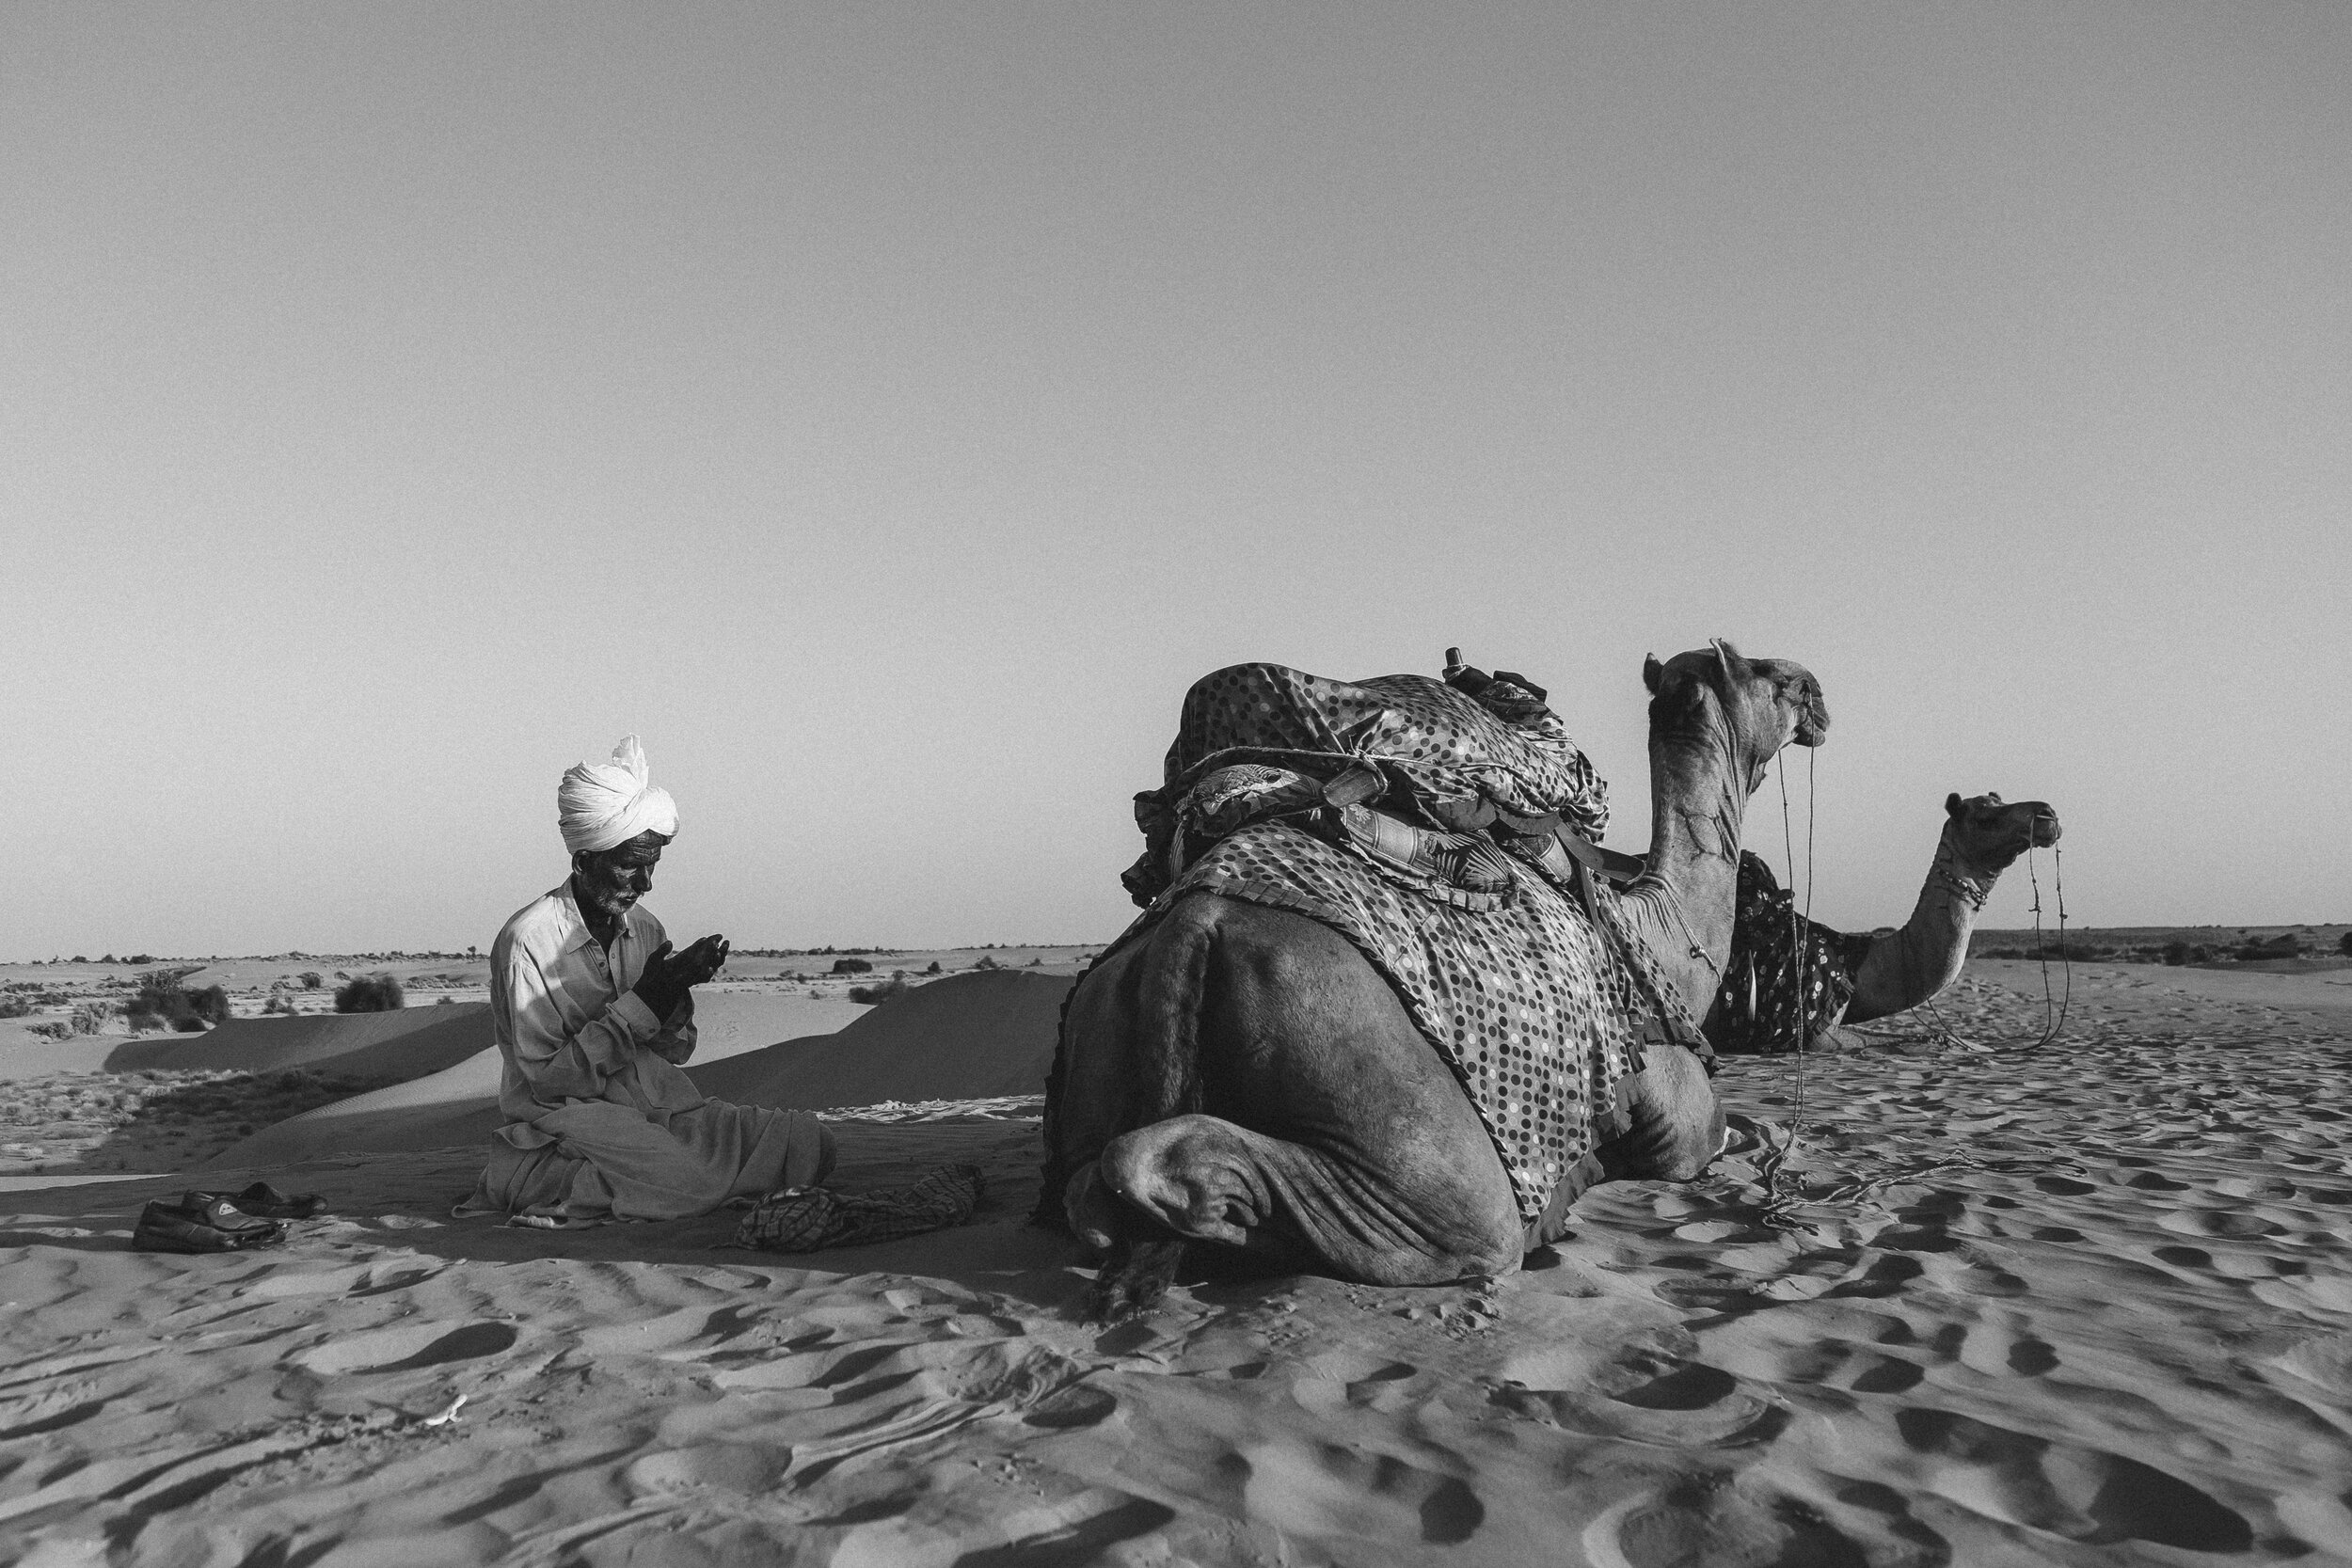 A camel rider in Sam desert dunes in Jaisalmer, Rajasthan taking